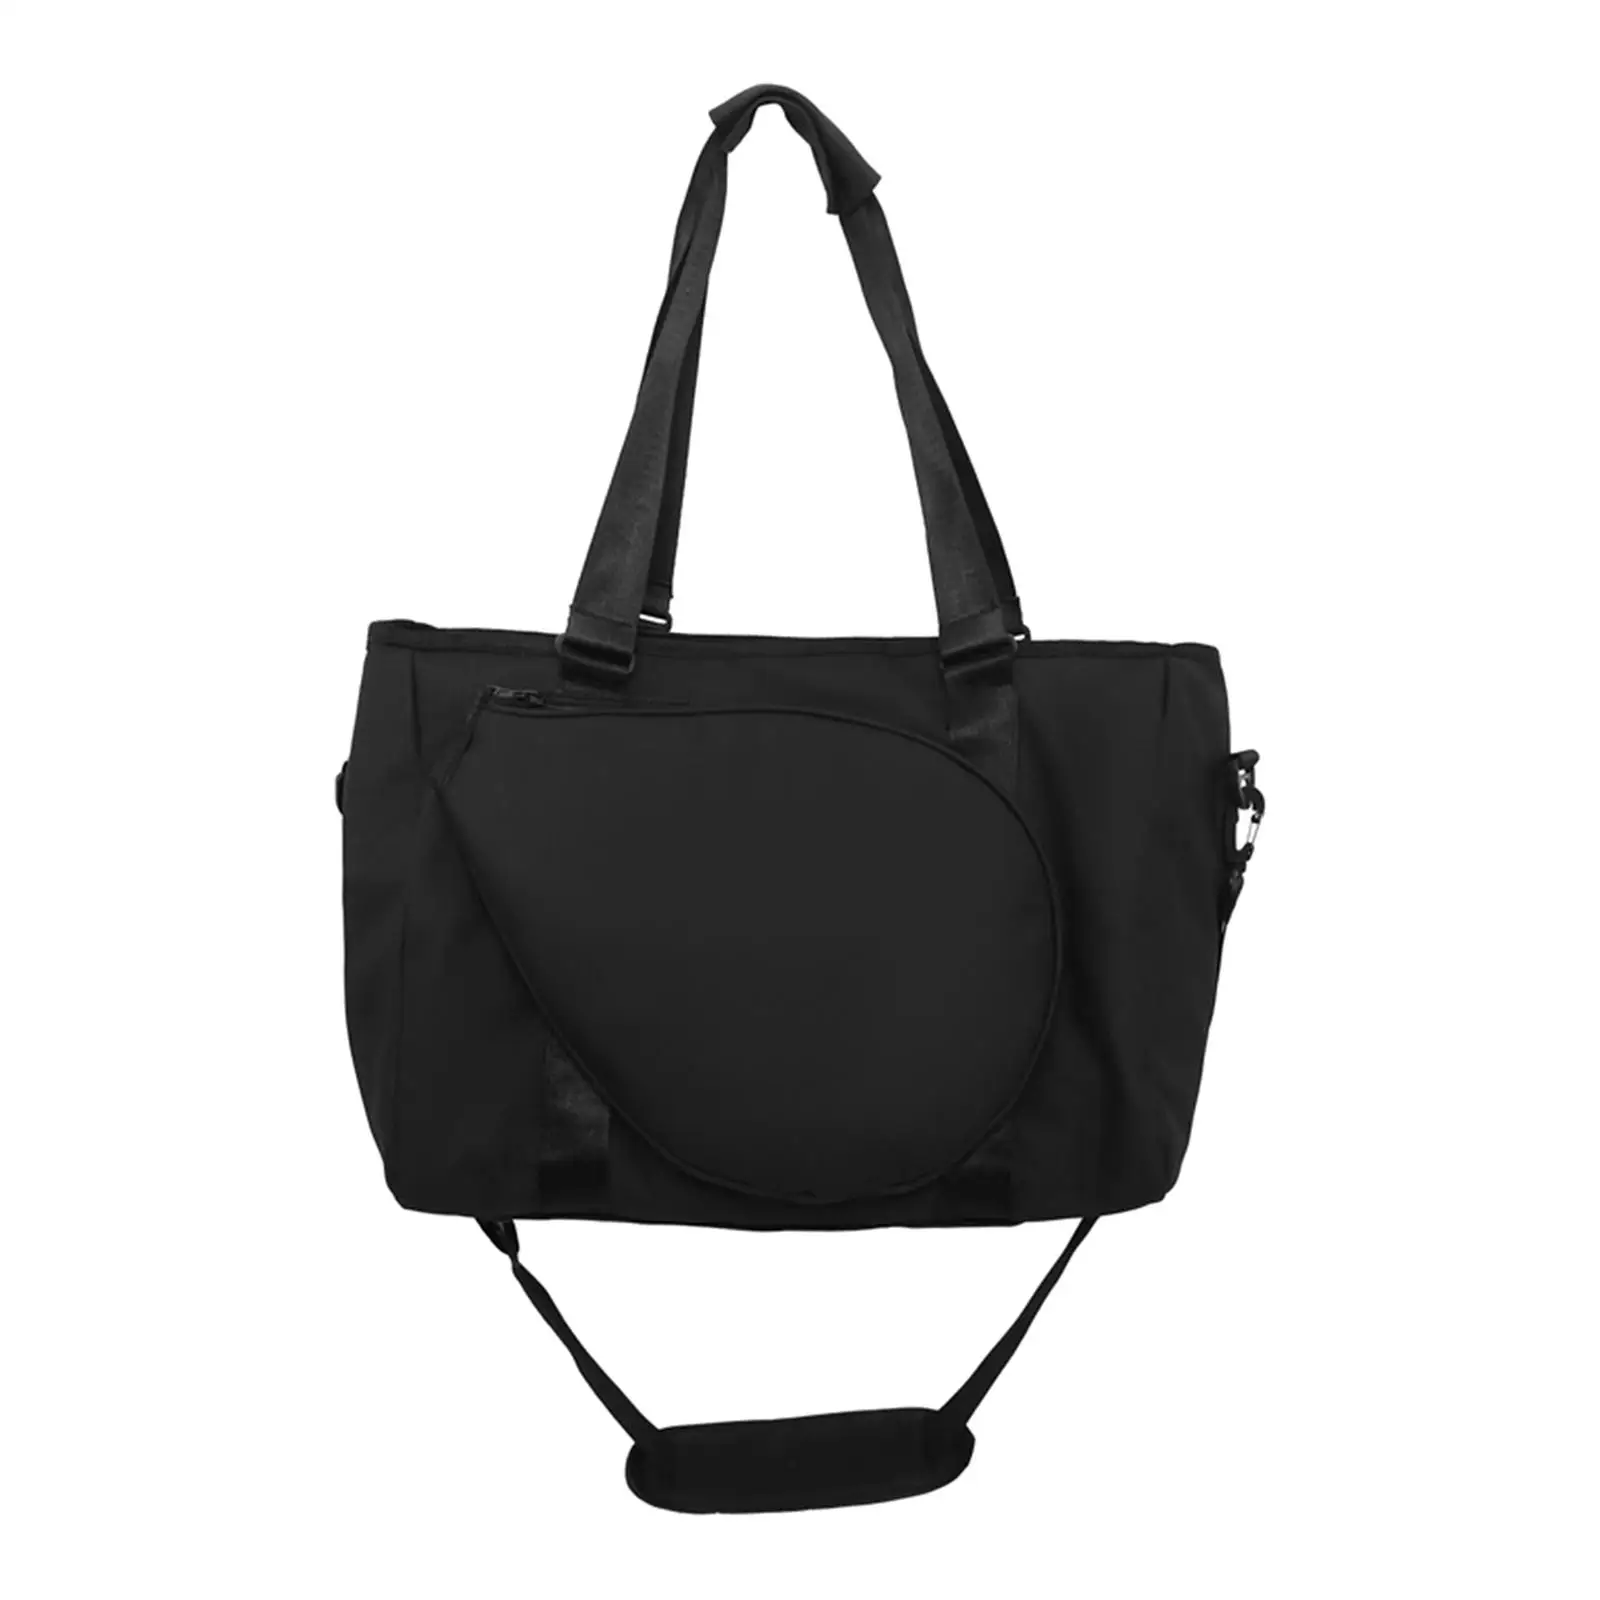 Tennis Shoulder Bag Carrying Bag Multifunctional with Zipper Handbag for Squash Racquets Pickleball Clothes Equipment